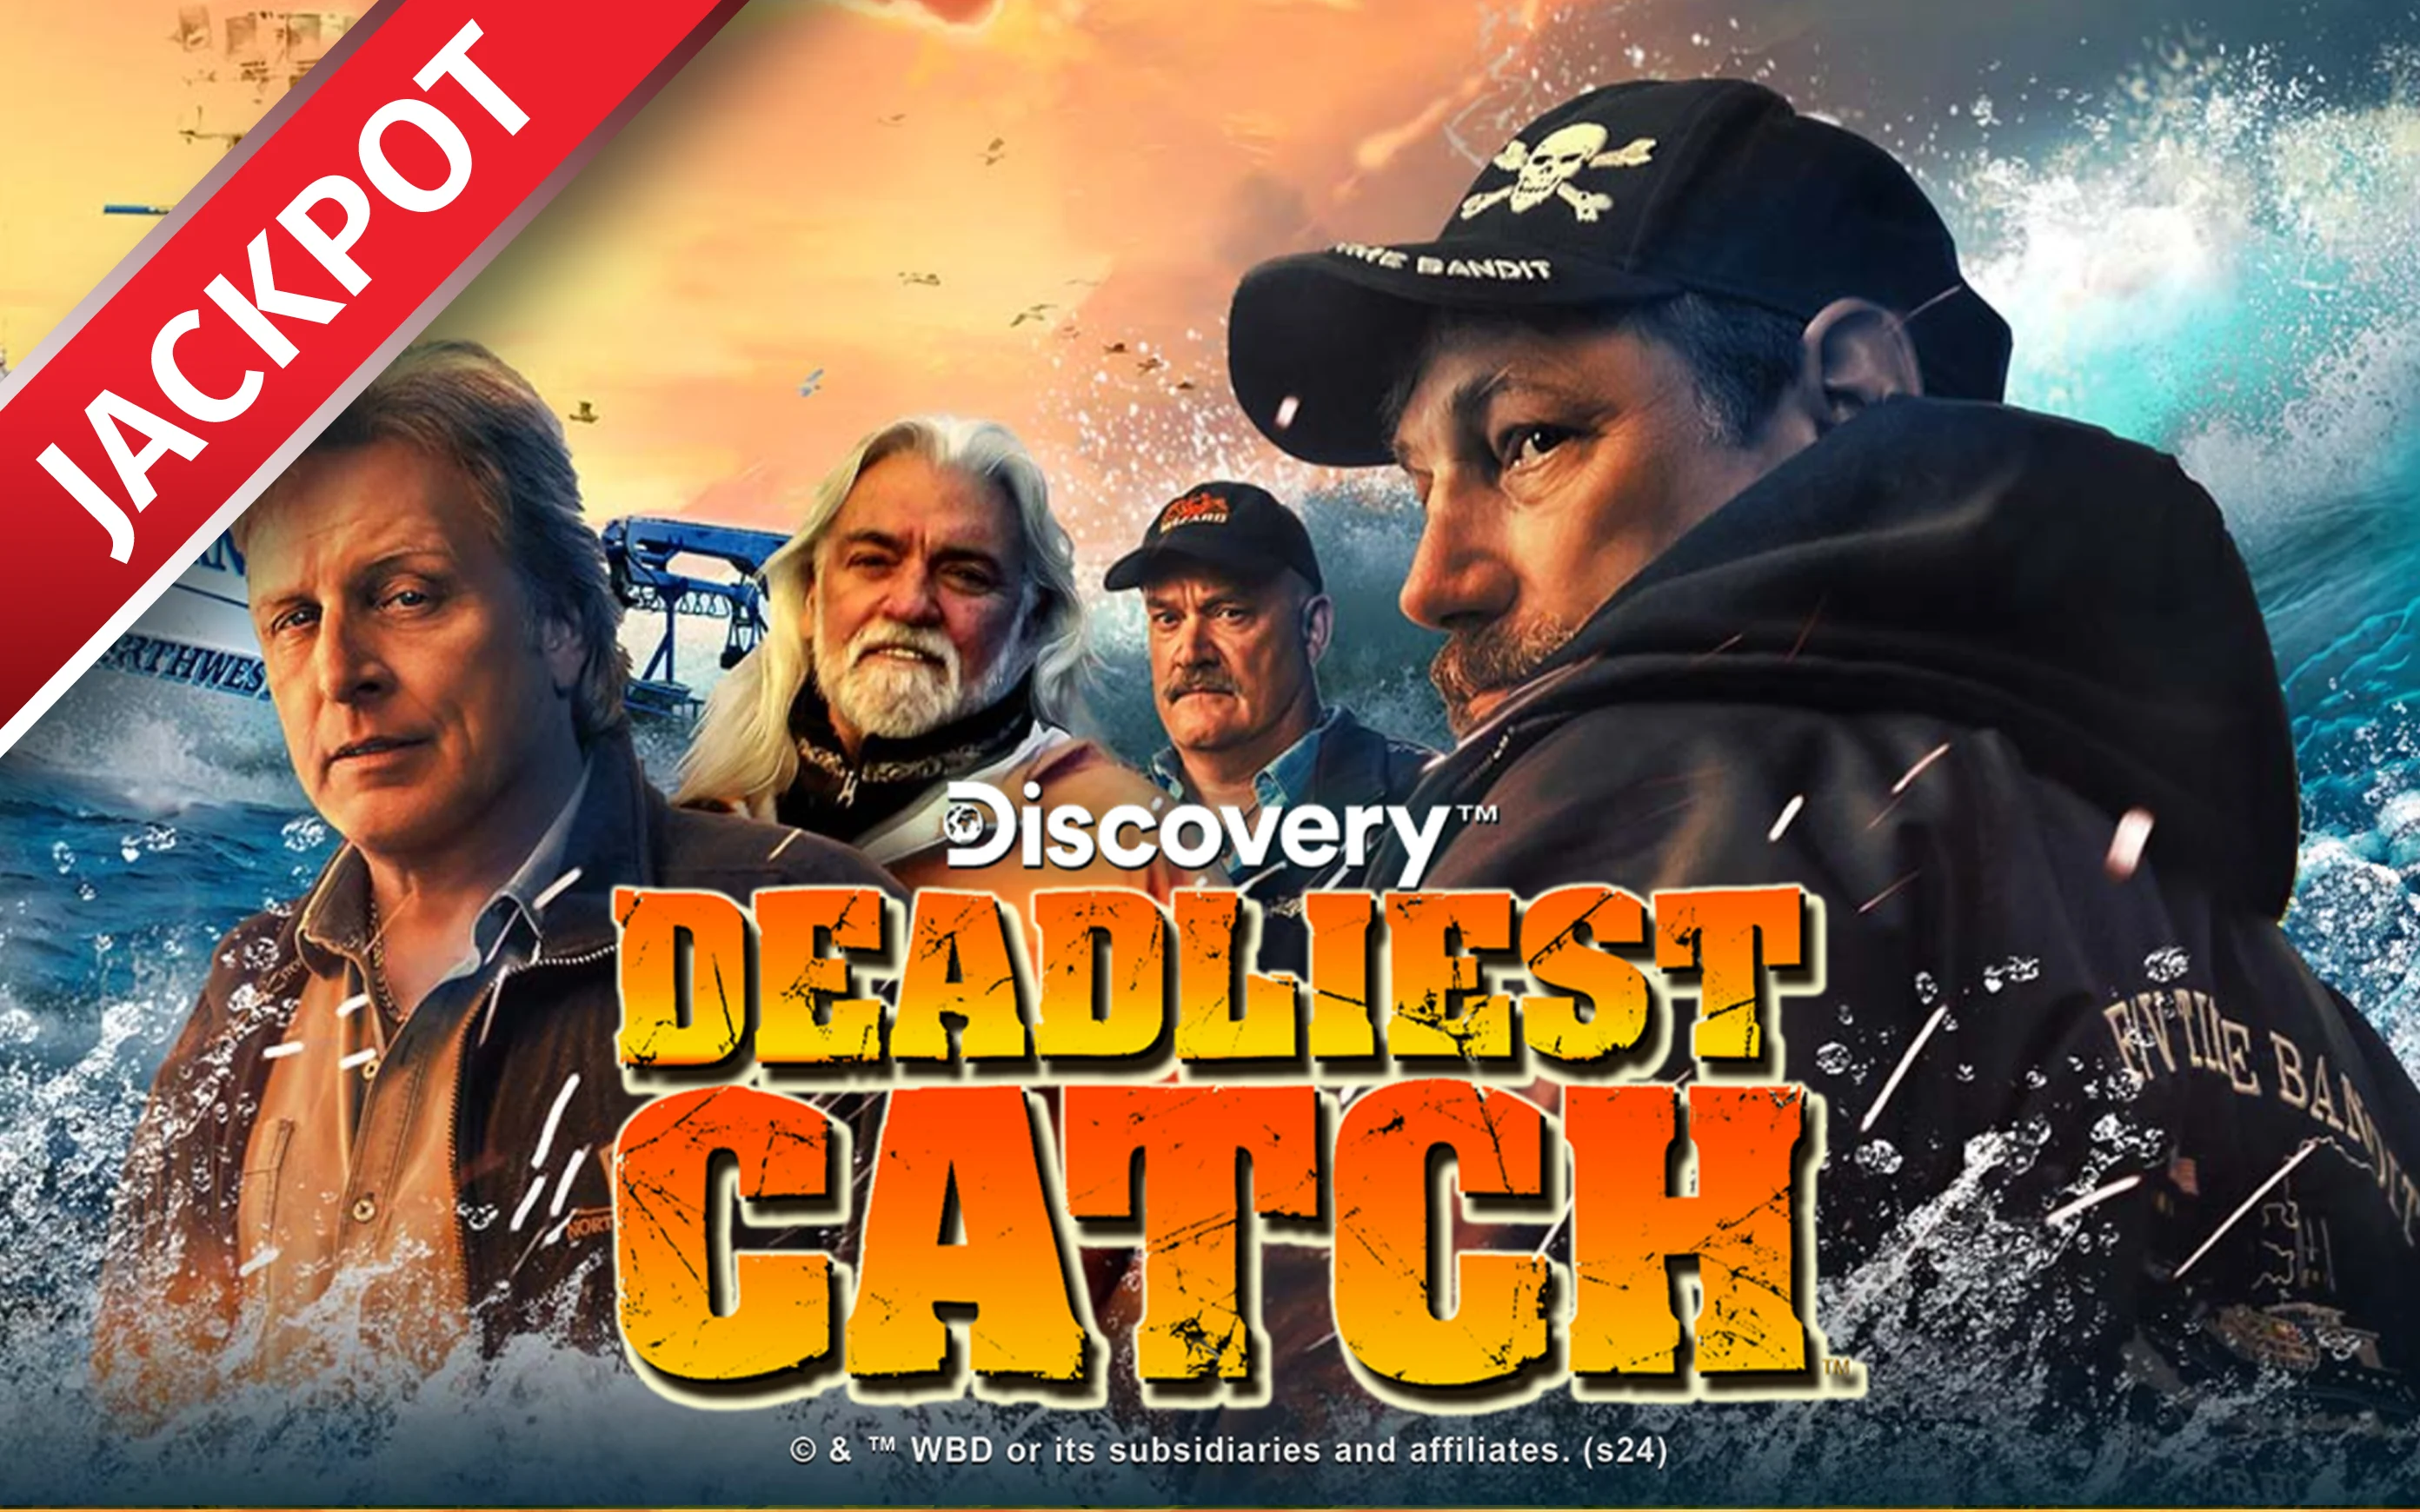 Starcasino.be online casino üzerinden Deadliest Catch™ oynayın